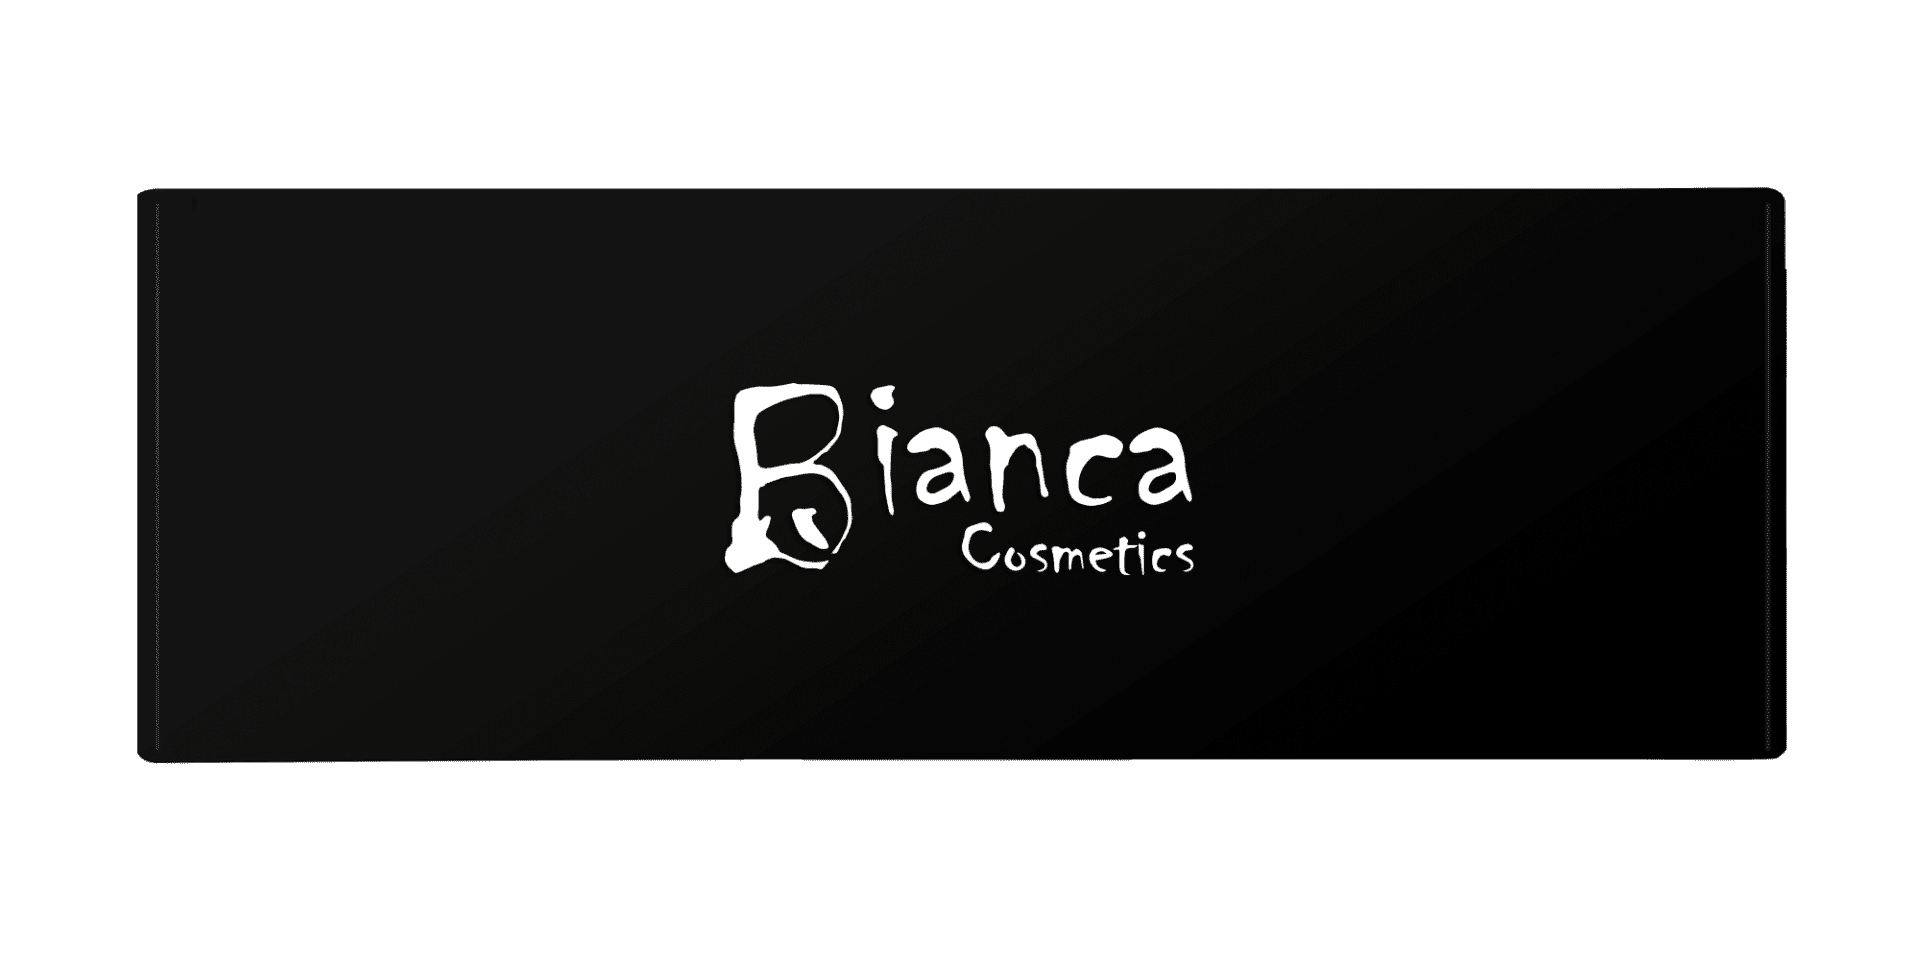 Bianca cosmetics logo on a black background.